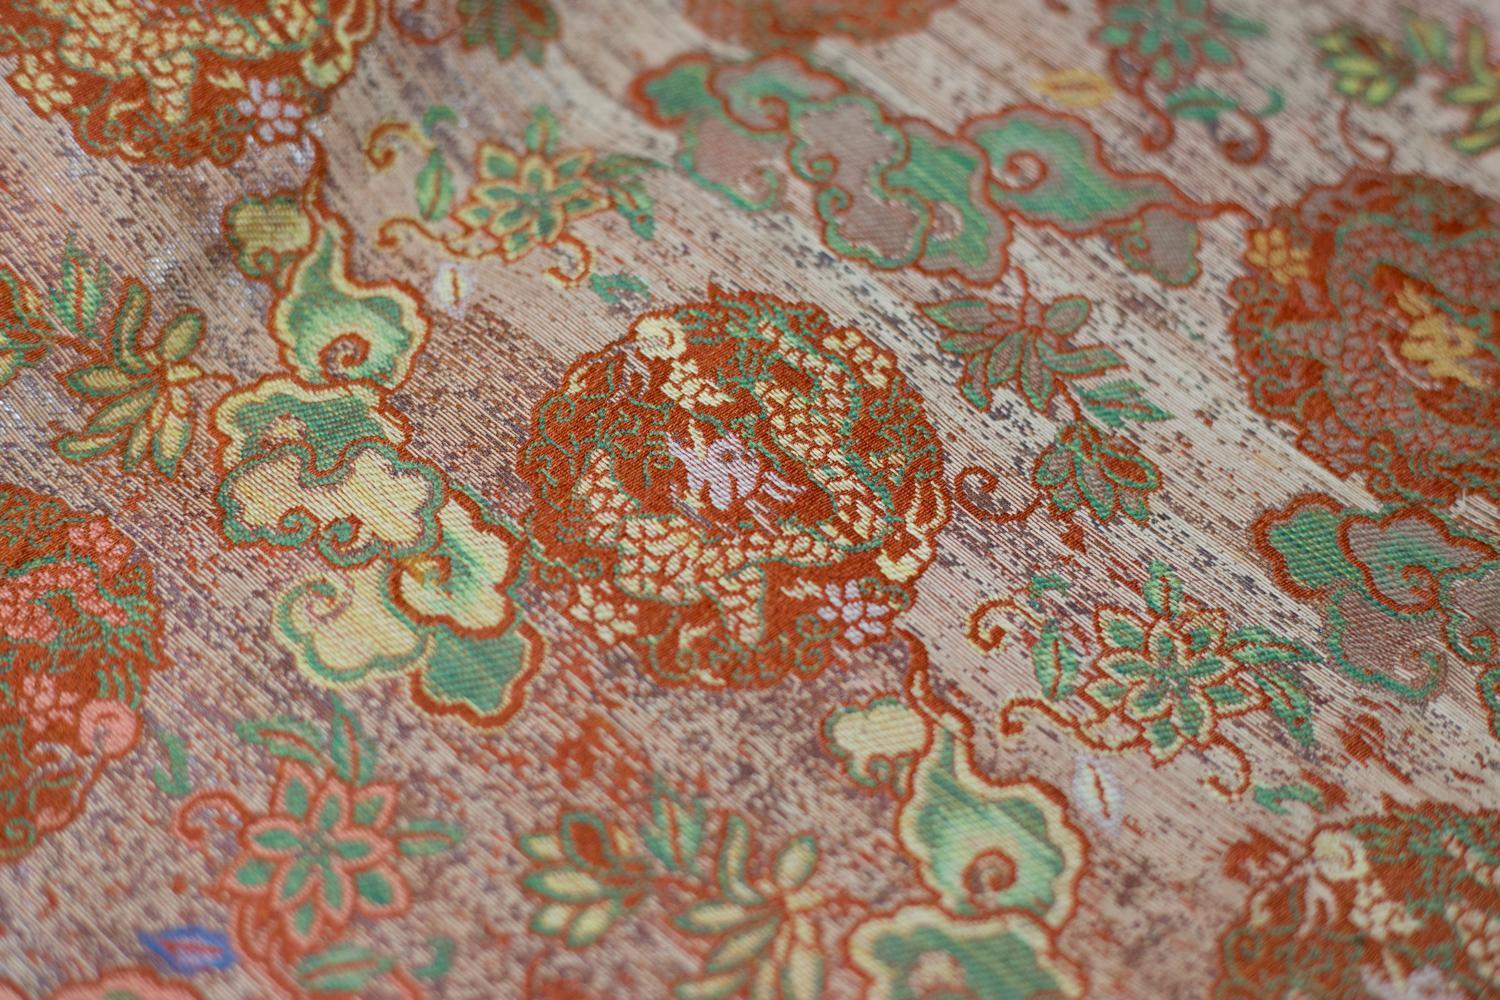 jinbaori pattern